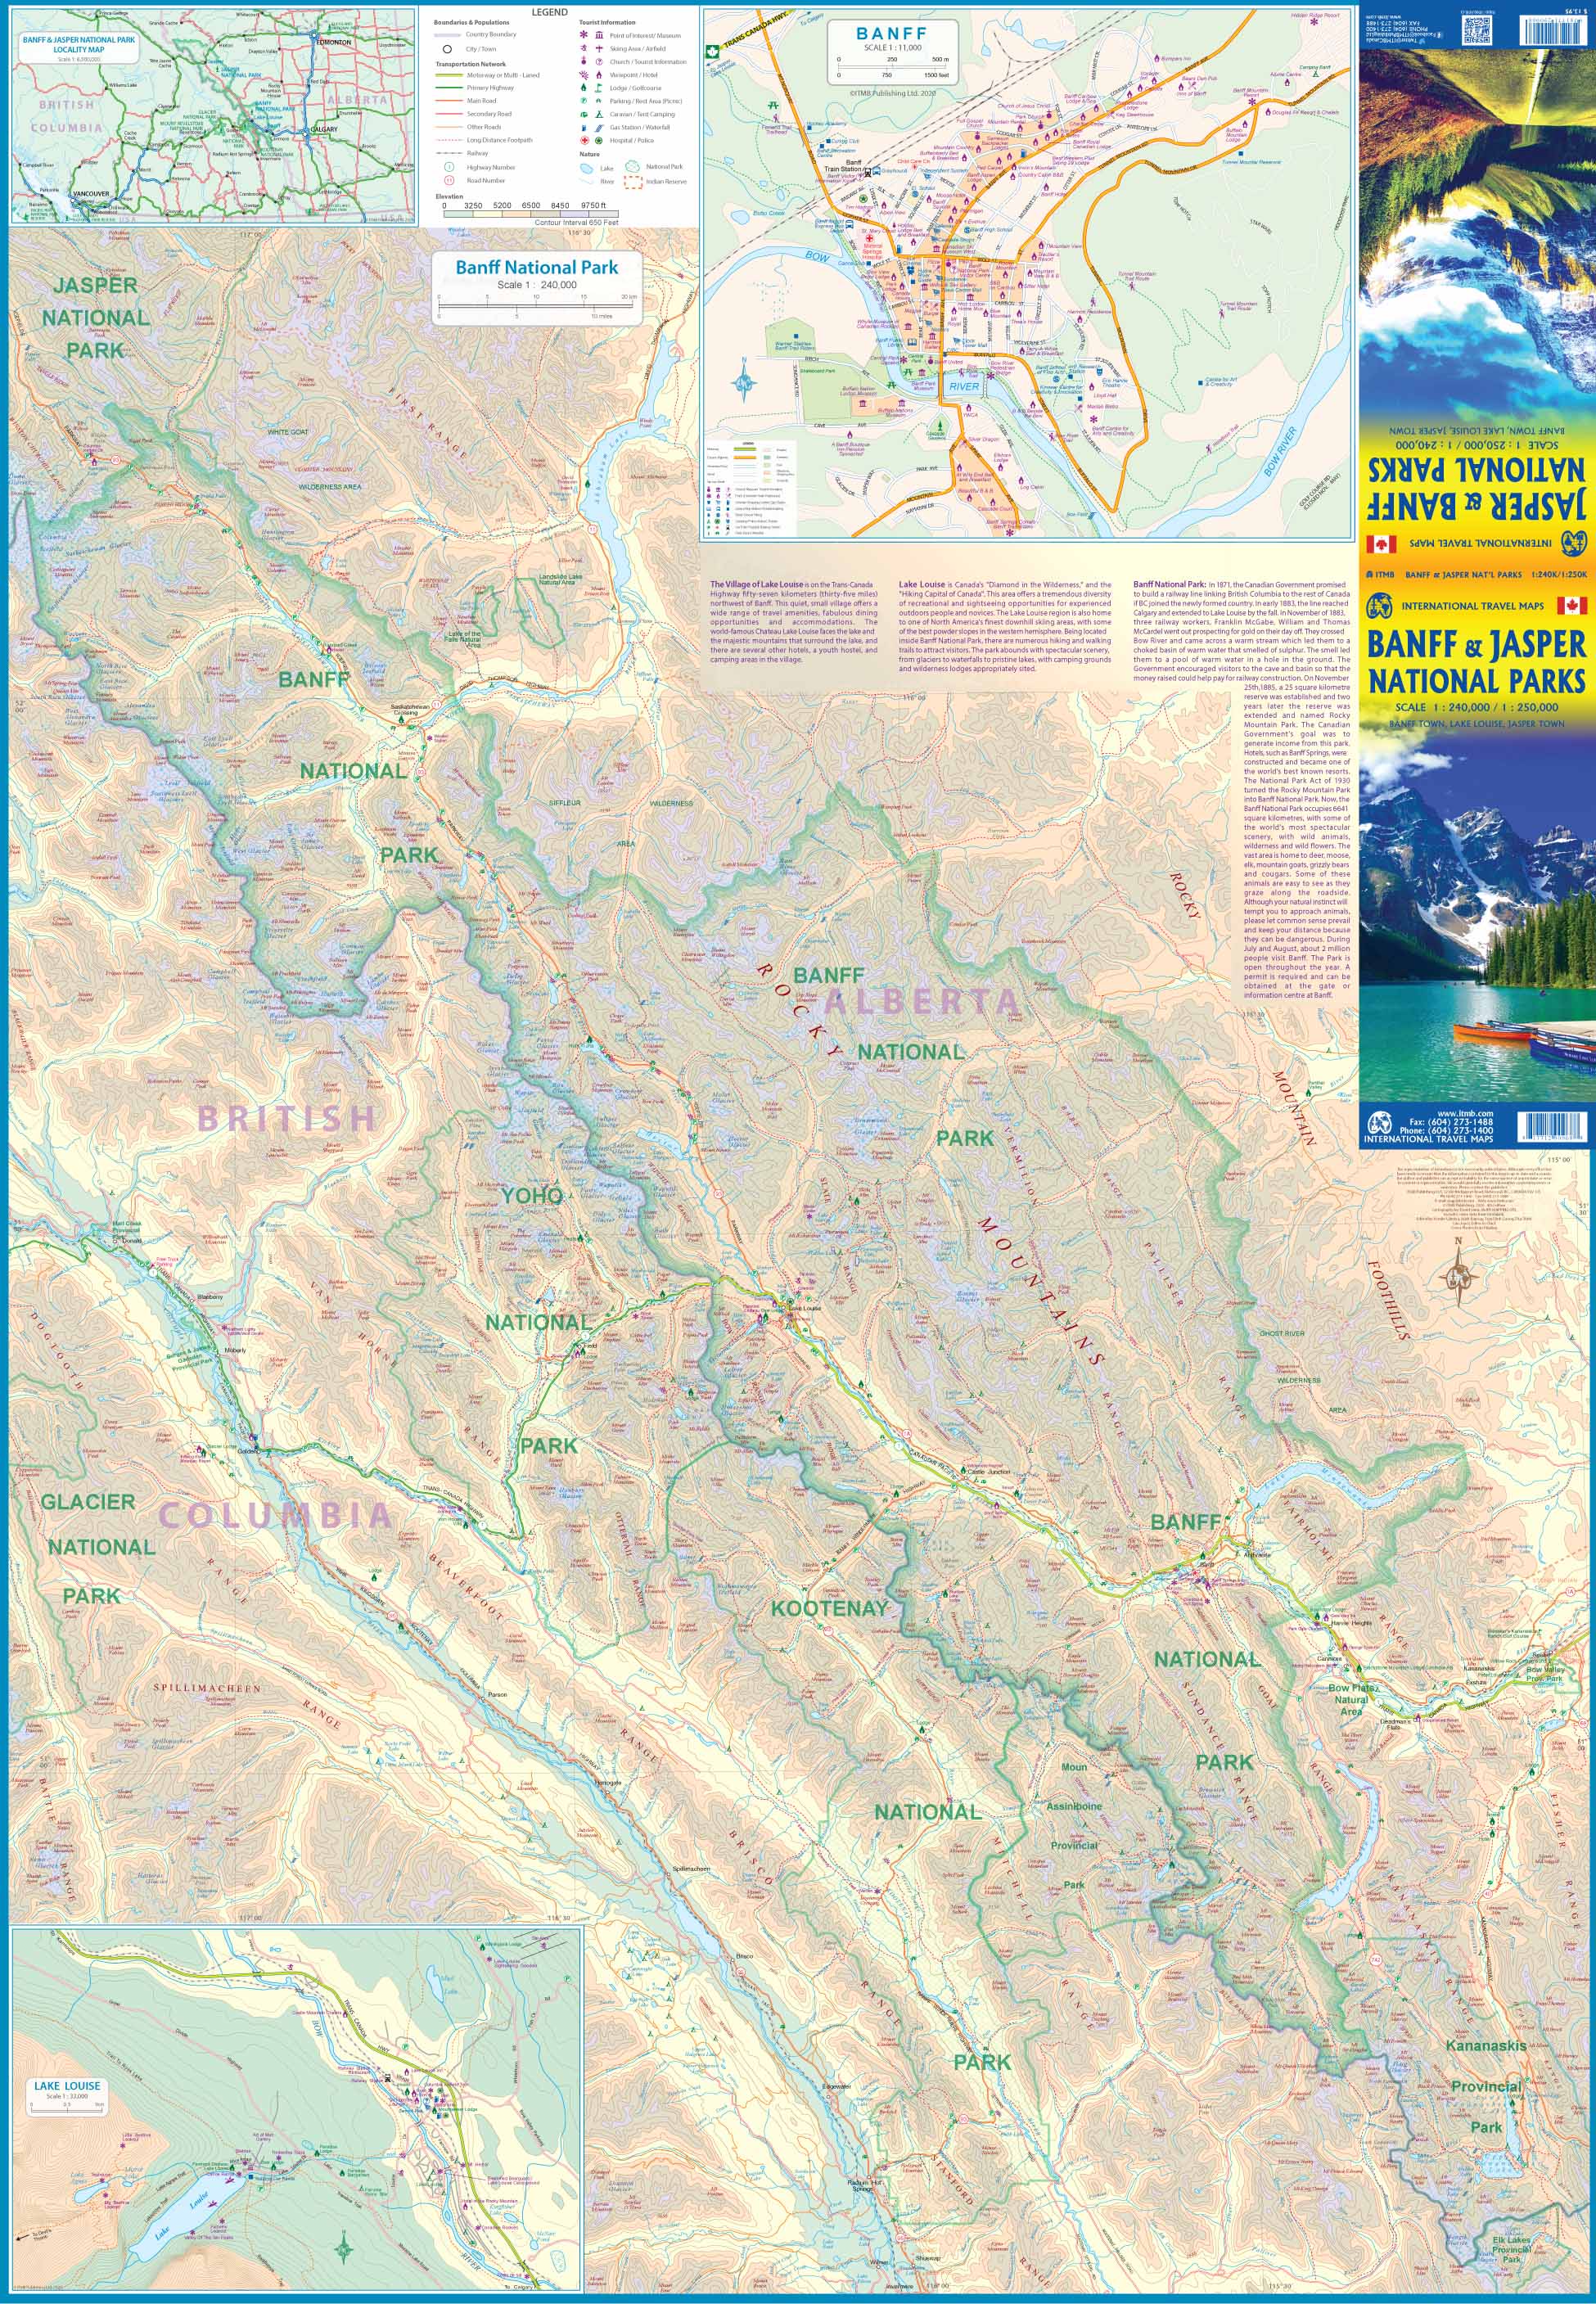 1. Banff and Jasper National Parks Travel Ref Map 1:240K/1:250K